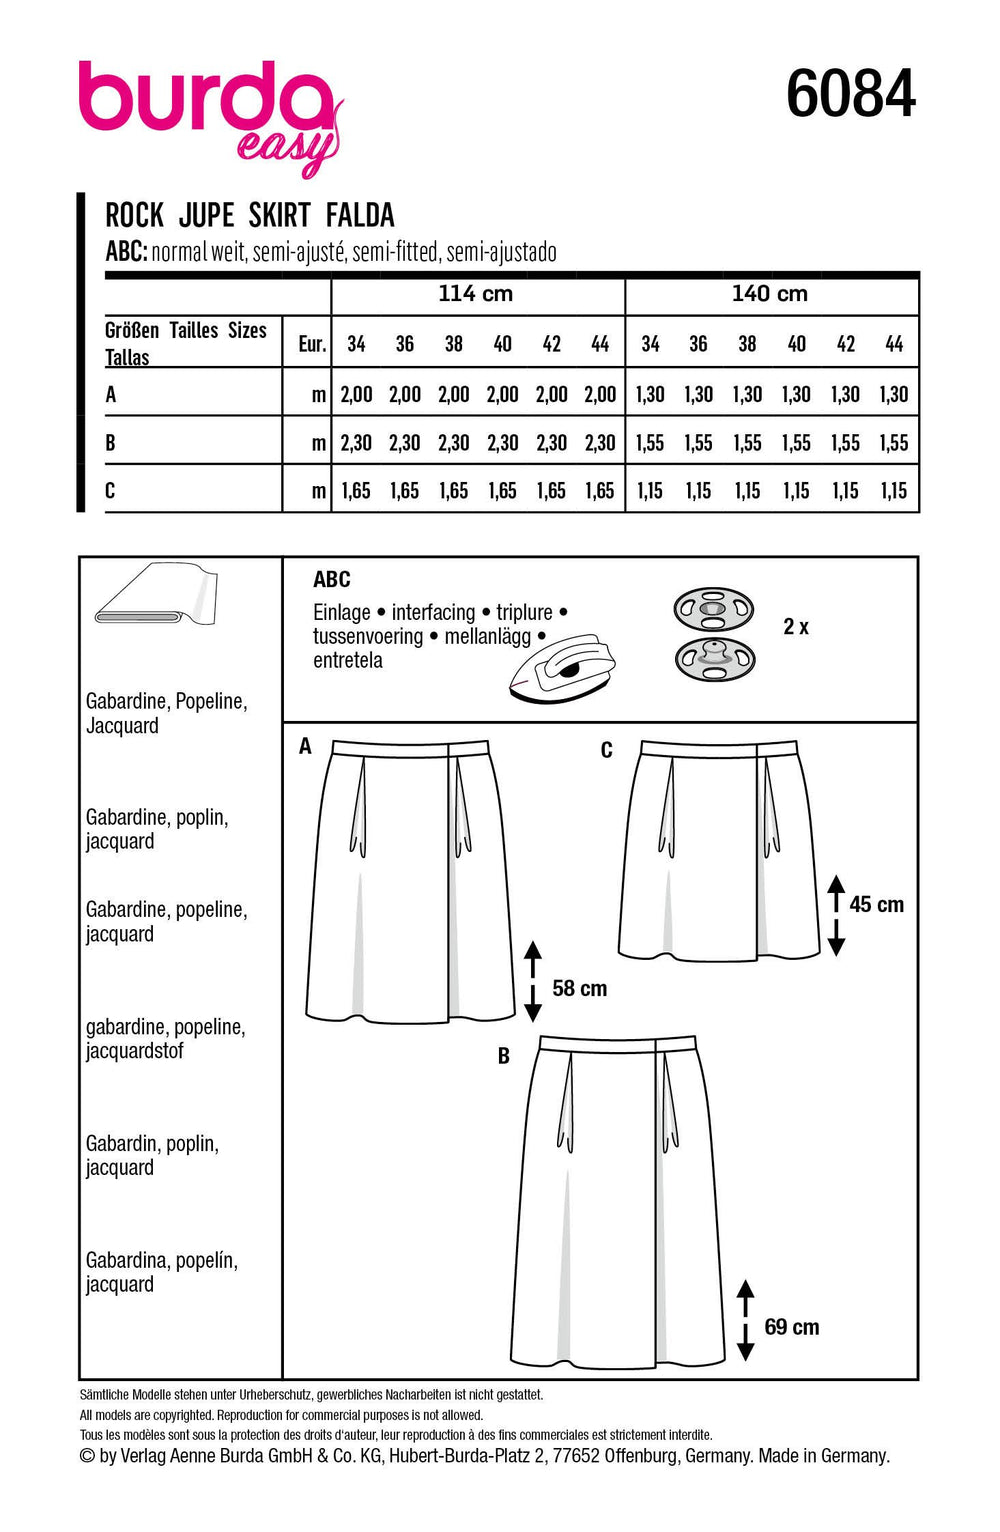 Burda Sewing Pattern 6084 Wrap Skirt from Jaycotts Sewing Supplies